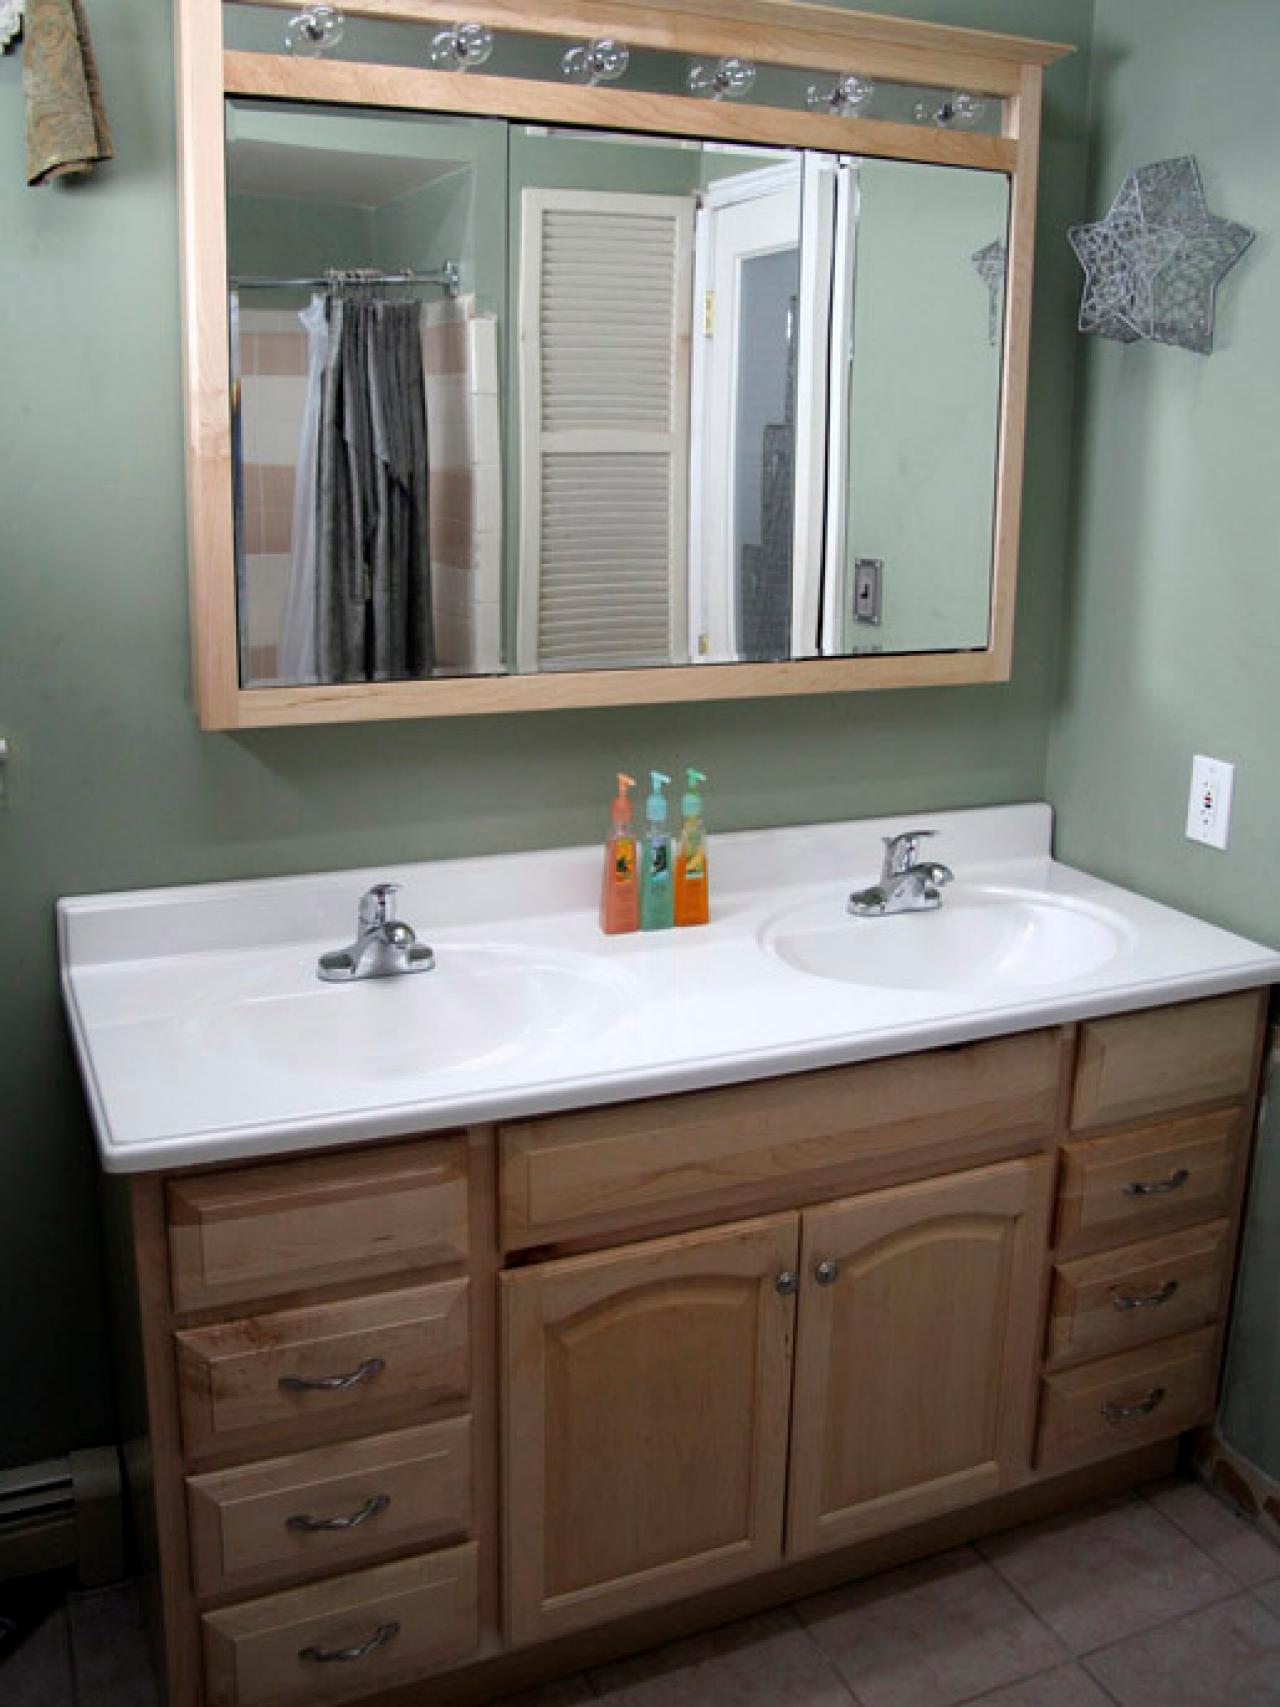 Installing A Bathroom Vanity - How To Change Your Bathroom Vanity